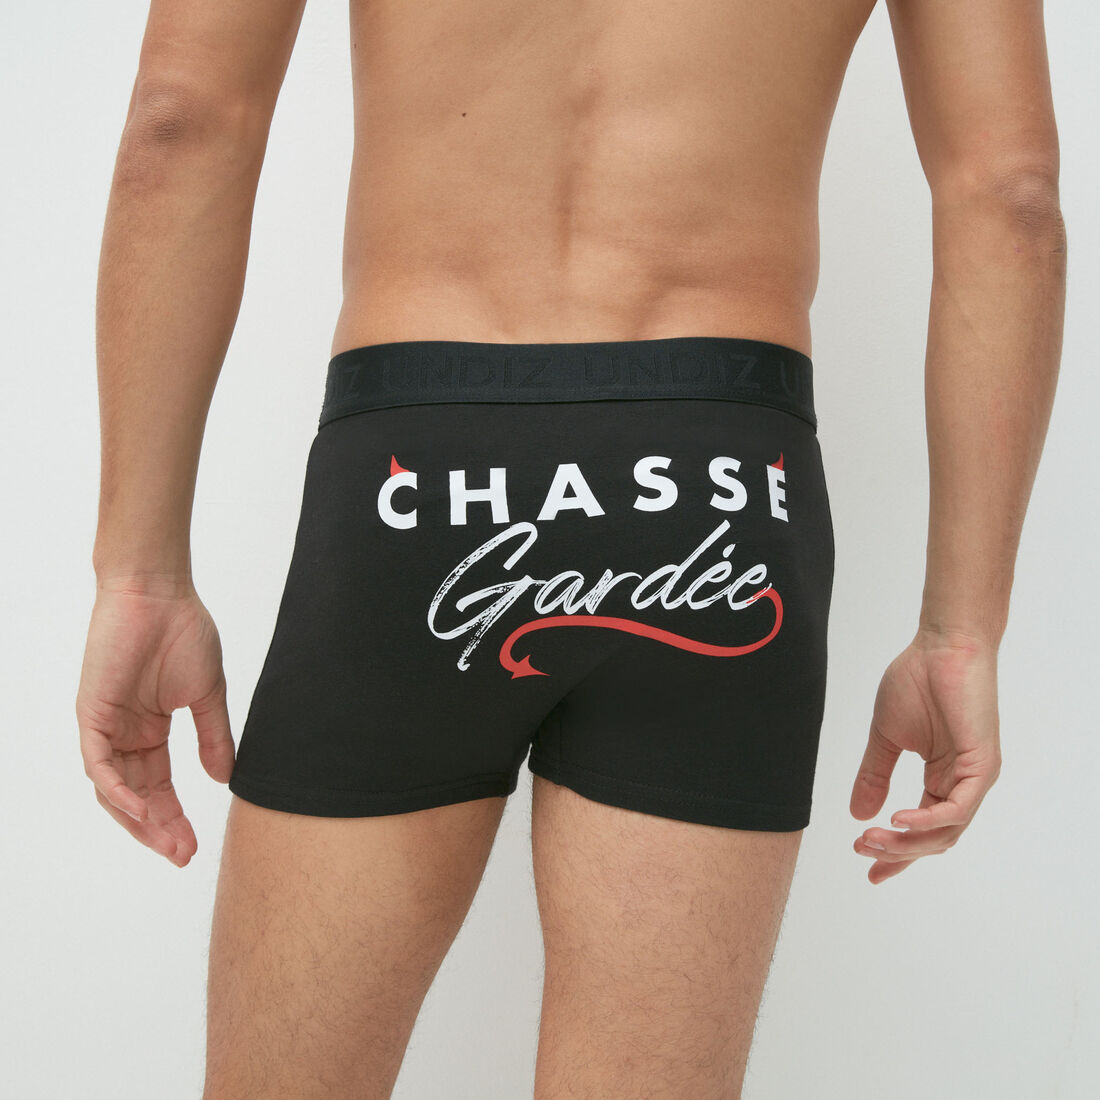 "Chasse gardée" slogan boxers;